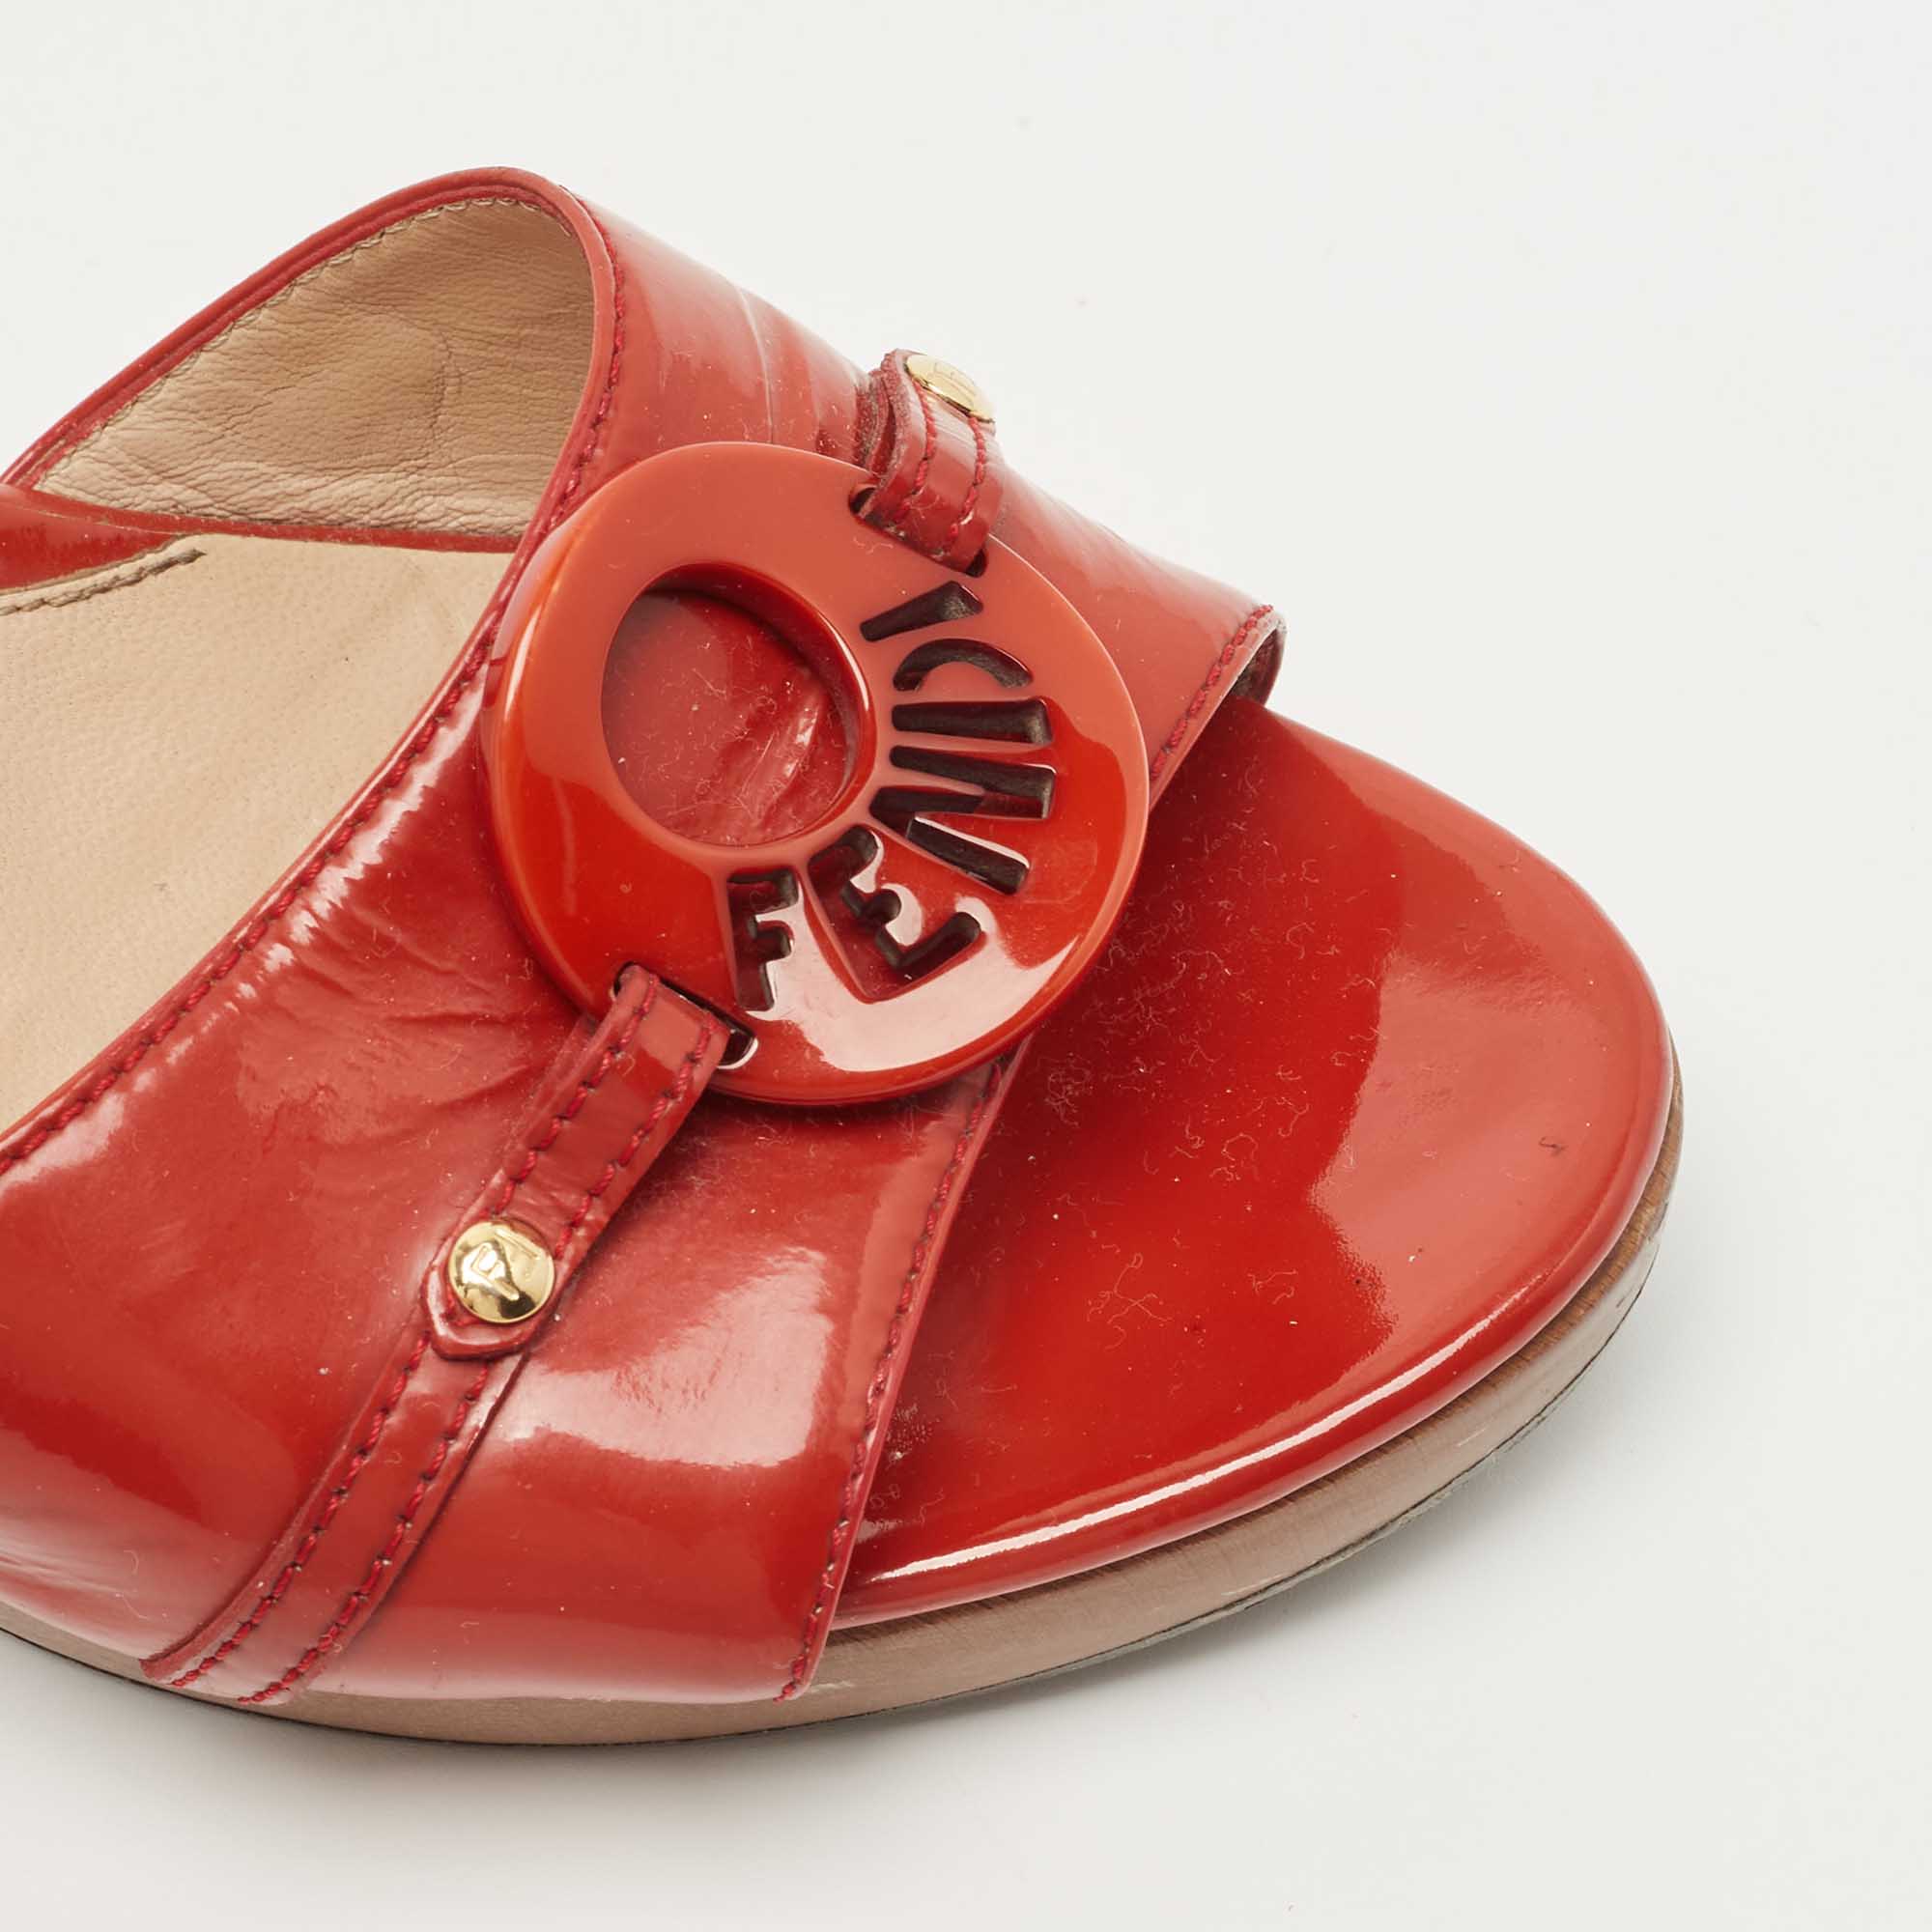 Fendi Red Patent Leather Logo Slide Sandals Size 37.5